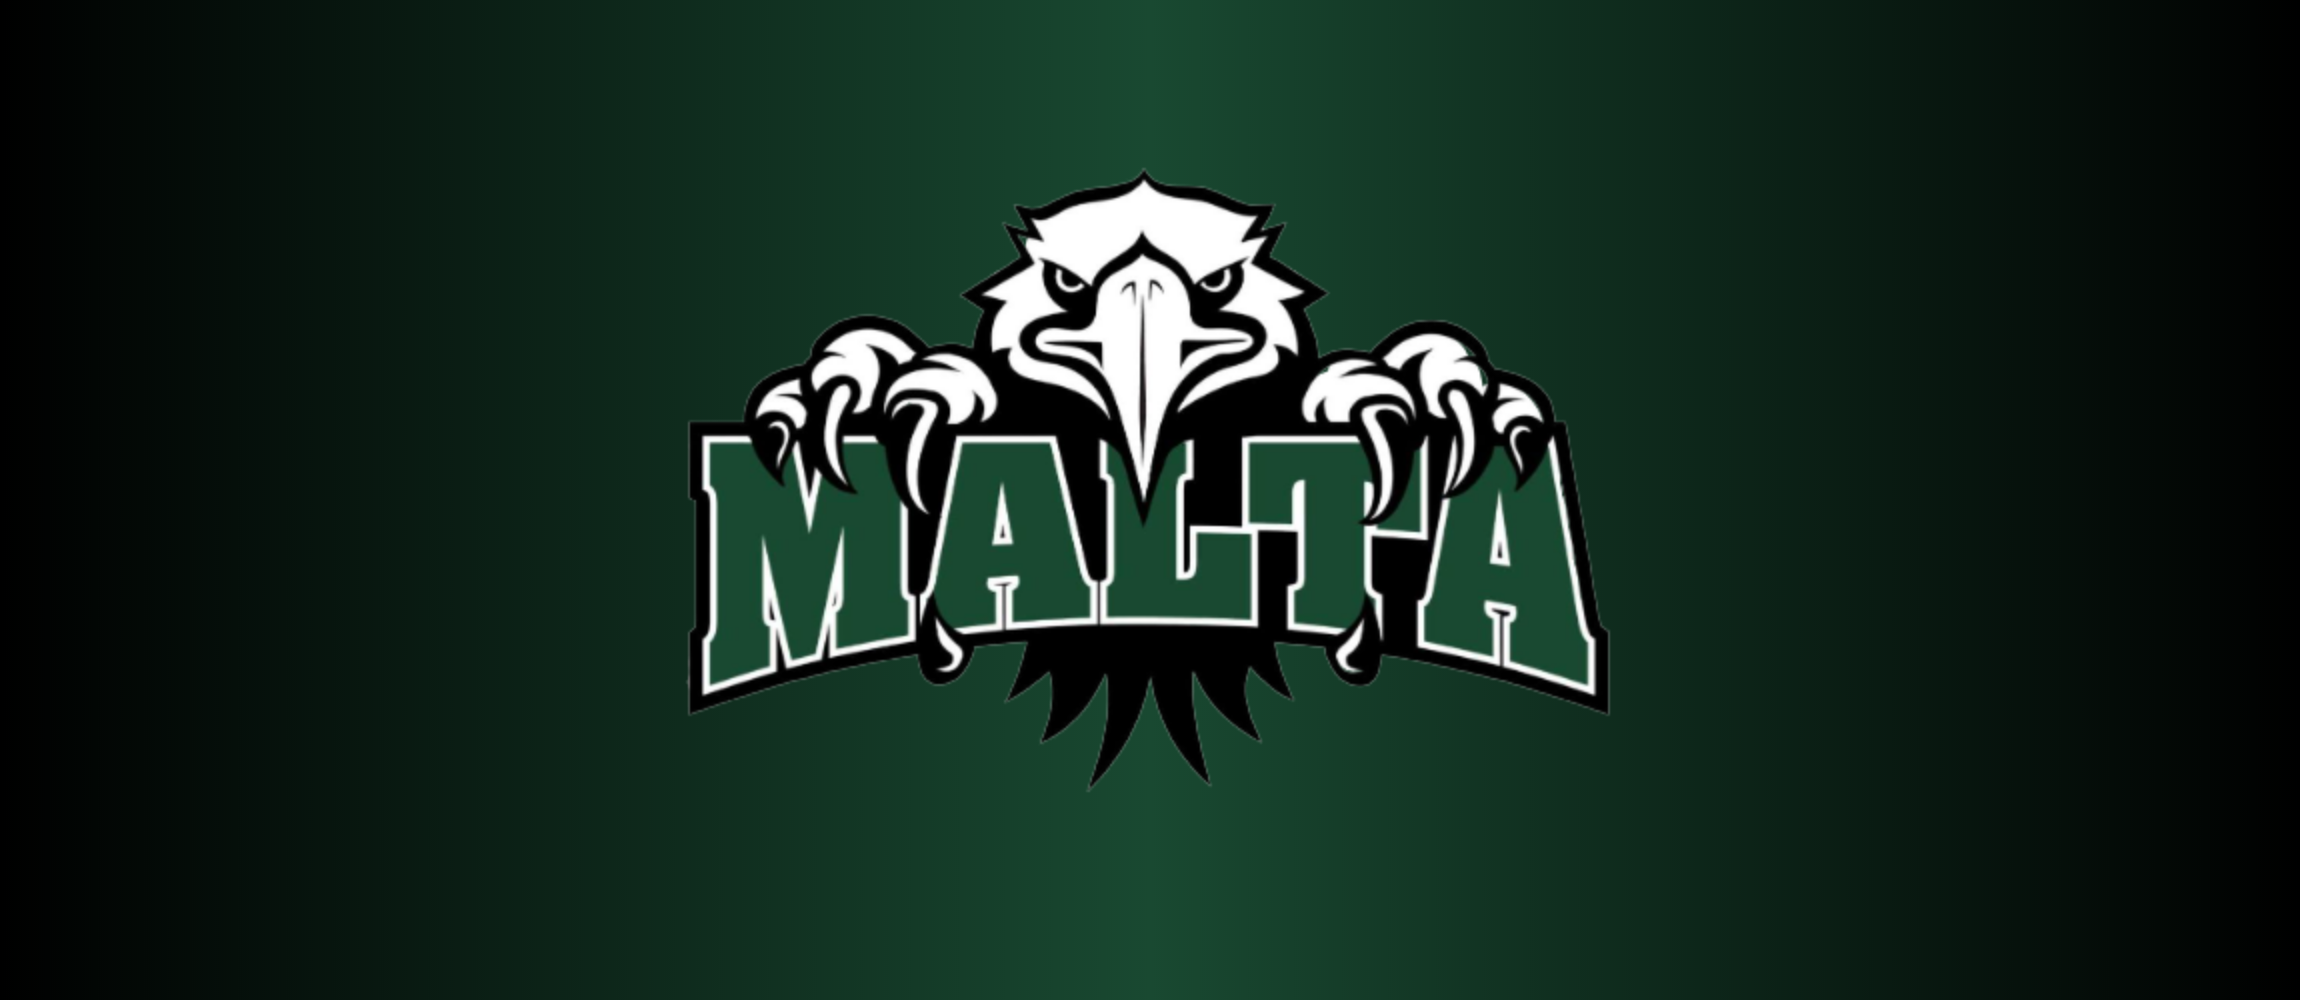 malta eagle logo